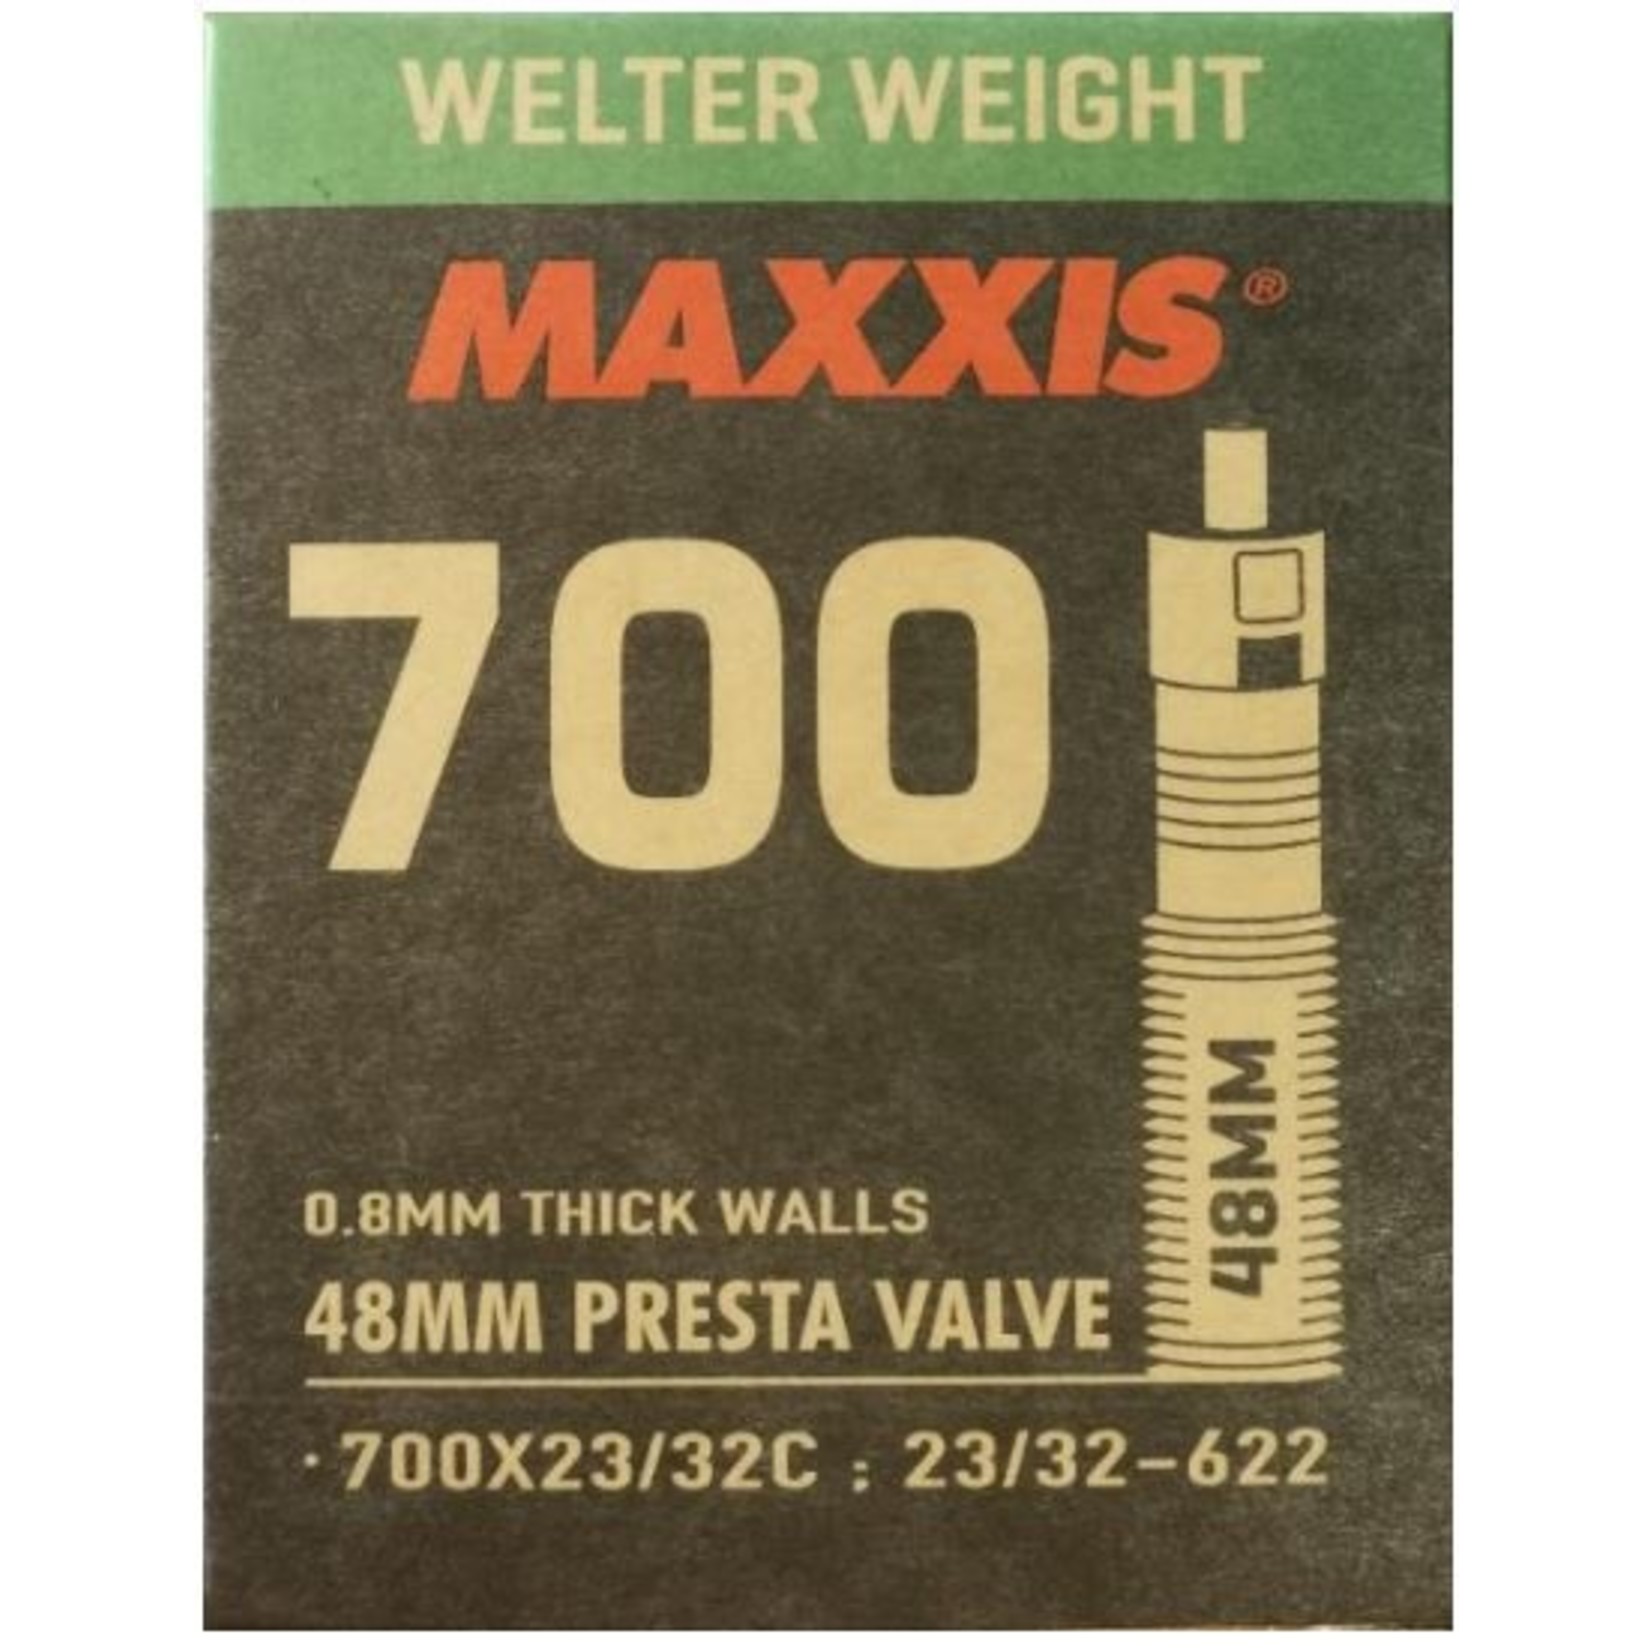 Maxxis Maxxis Welterweight Bike Tube - 700 X 23/32 Presta valves 48 RVC - Pair